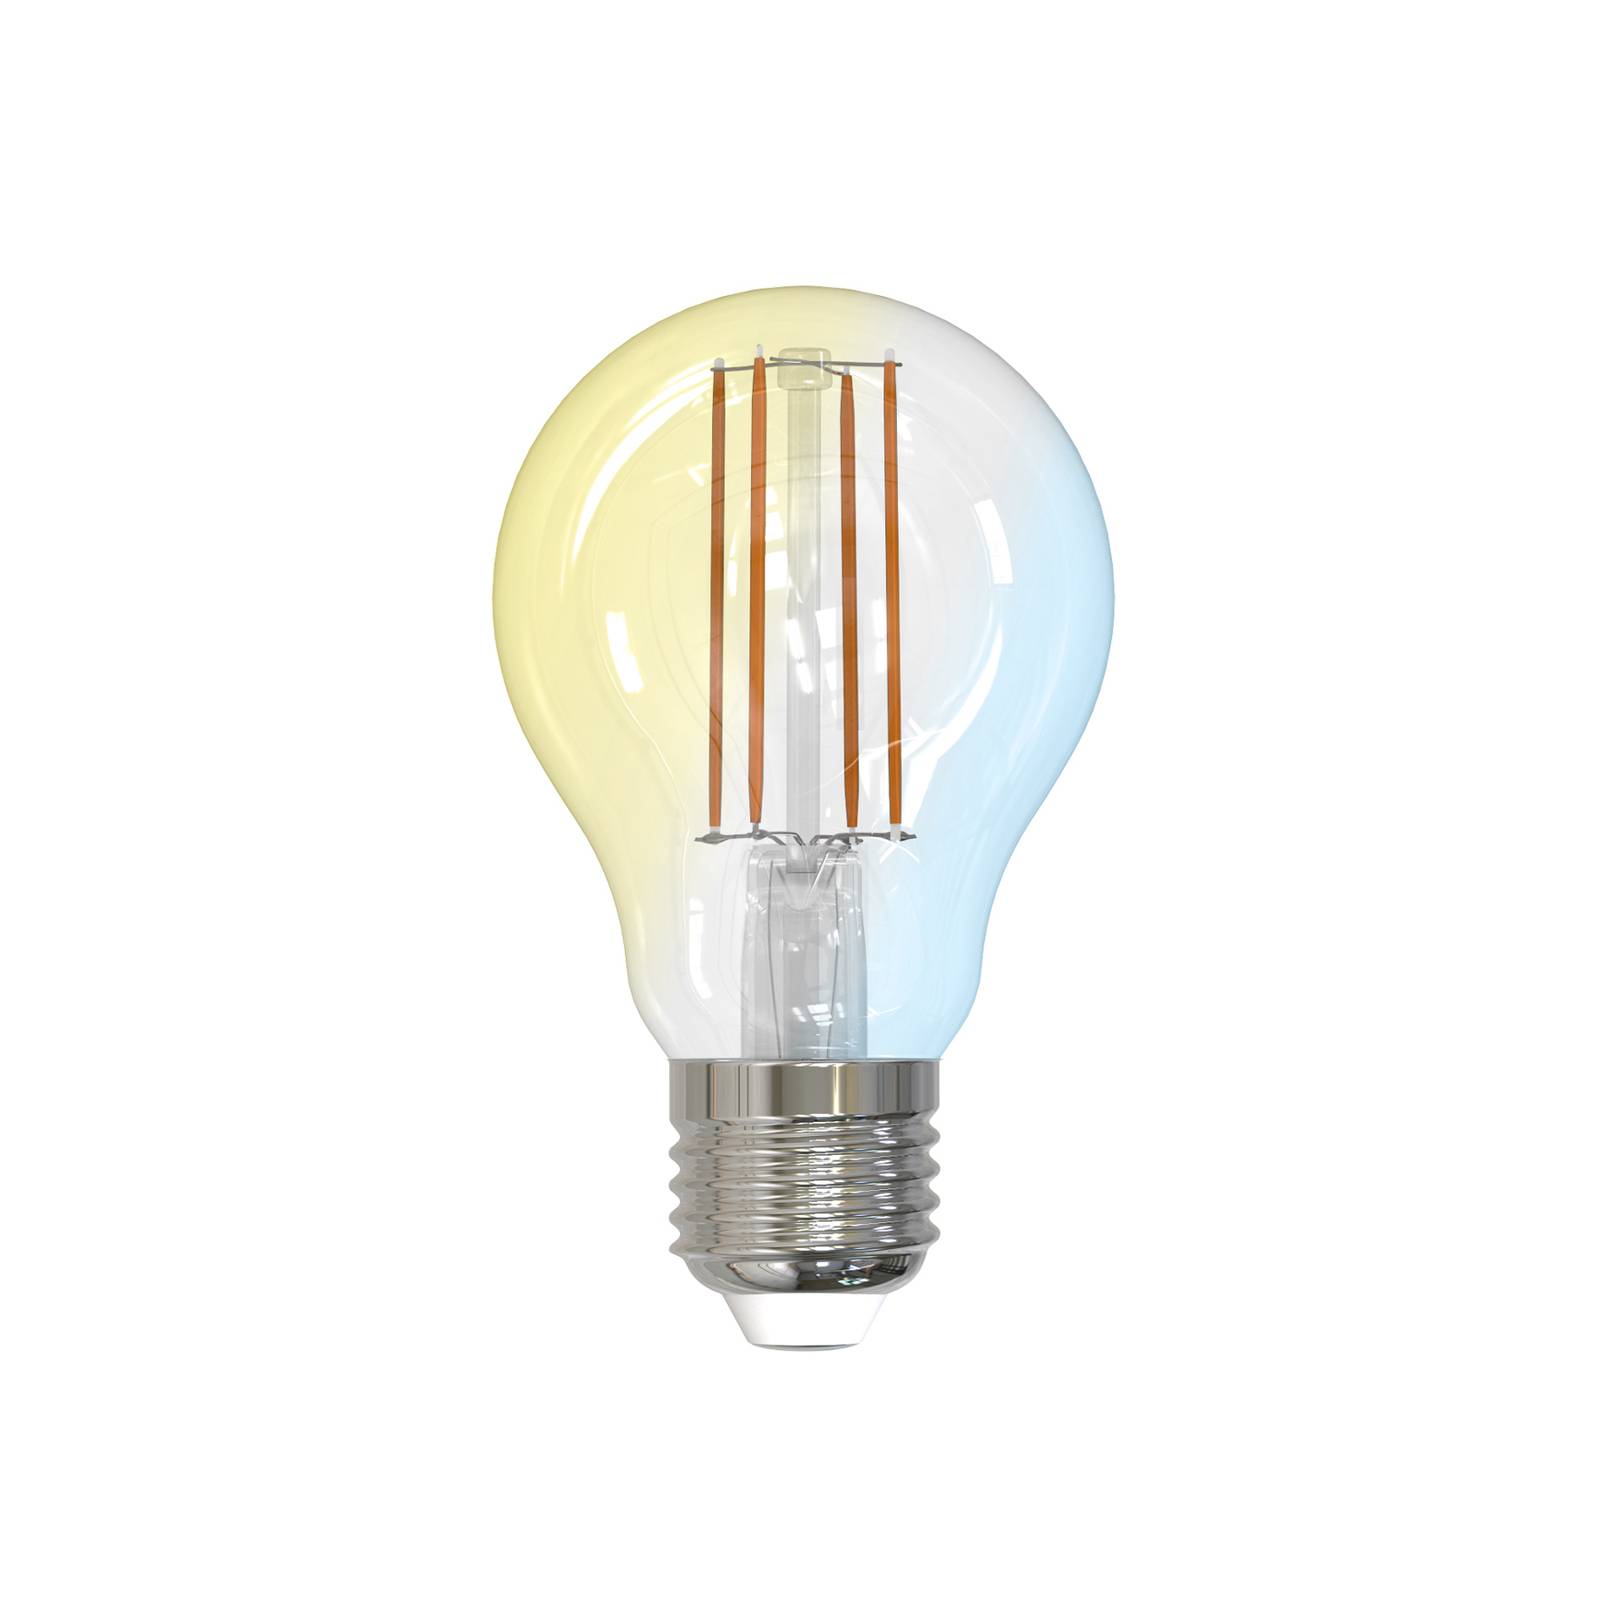 PRIOS Smart E27 A60 LED-Lampe 7W tunable white WLAN klar